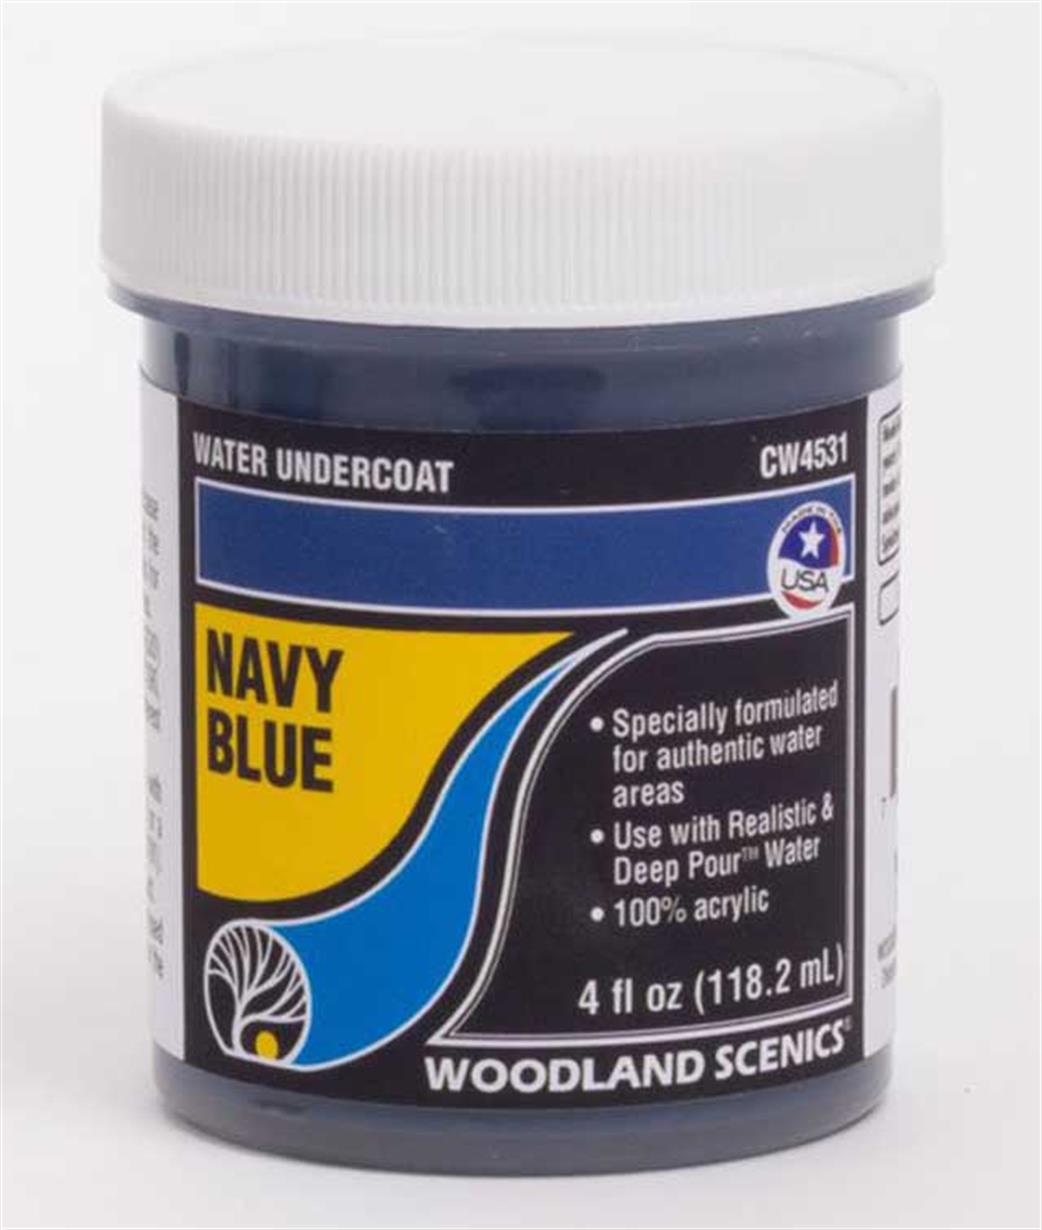 Woodland Scenics CW4531 Navy Blue Water Undercoat